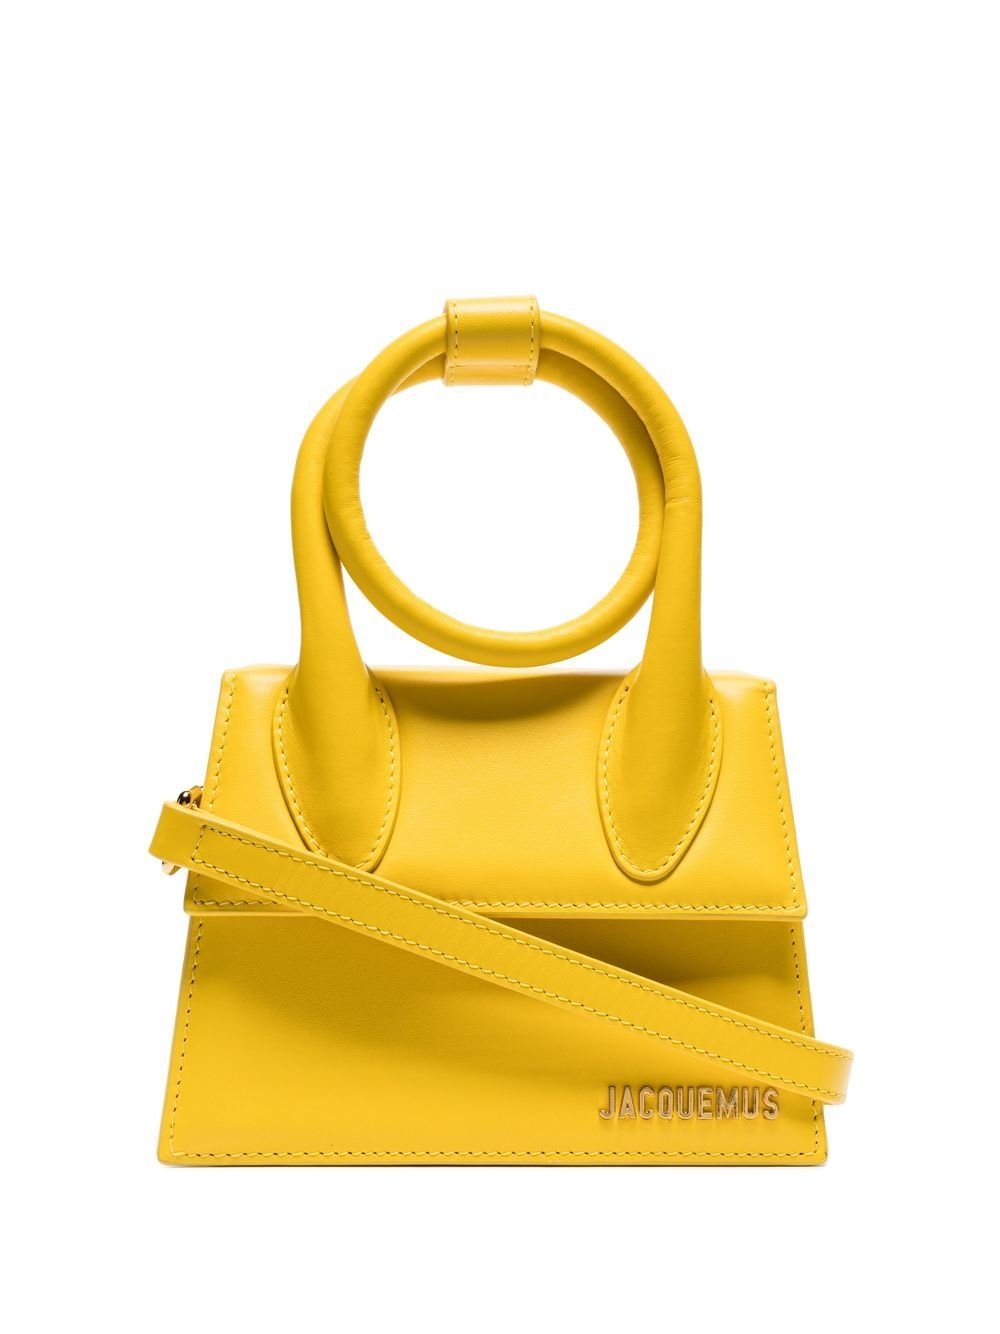 Jacquemus Le Chiquito Tote Bag In Gelb | ModeSens